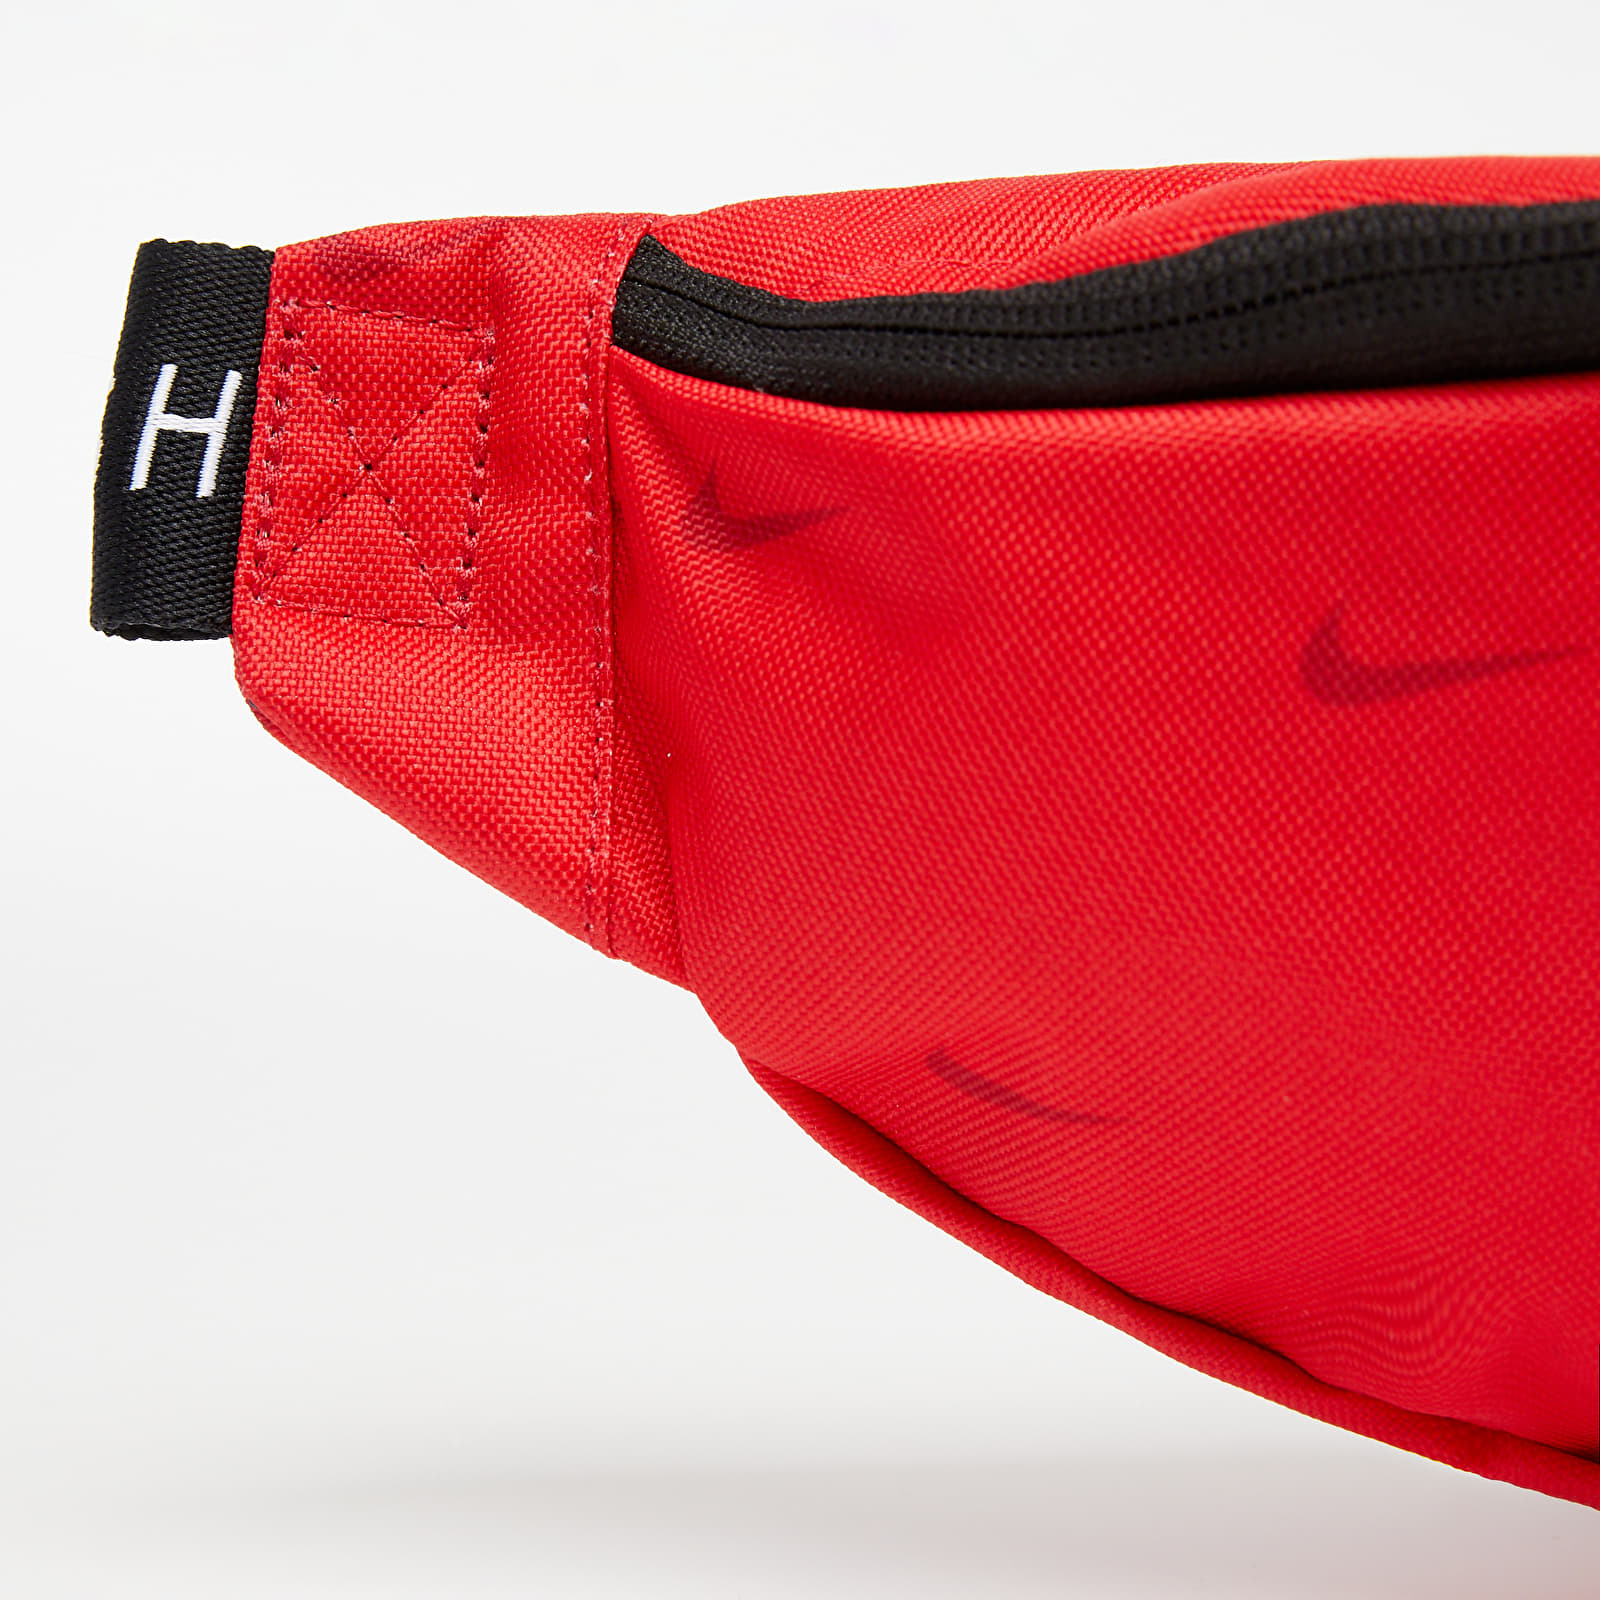 Sacs banane Nike Heritage Hip Pack Particle Grey/ University Red